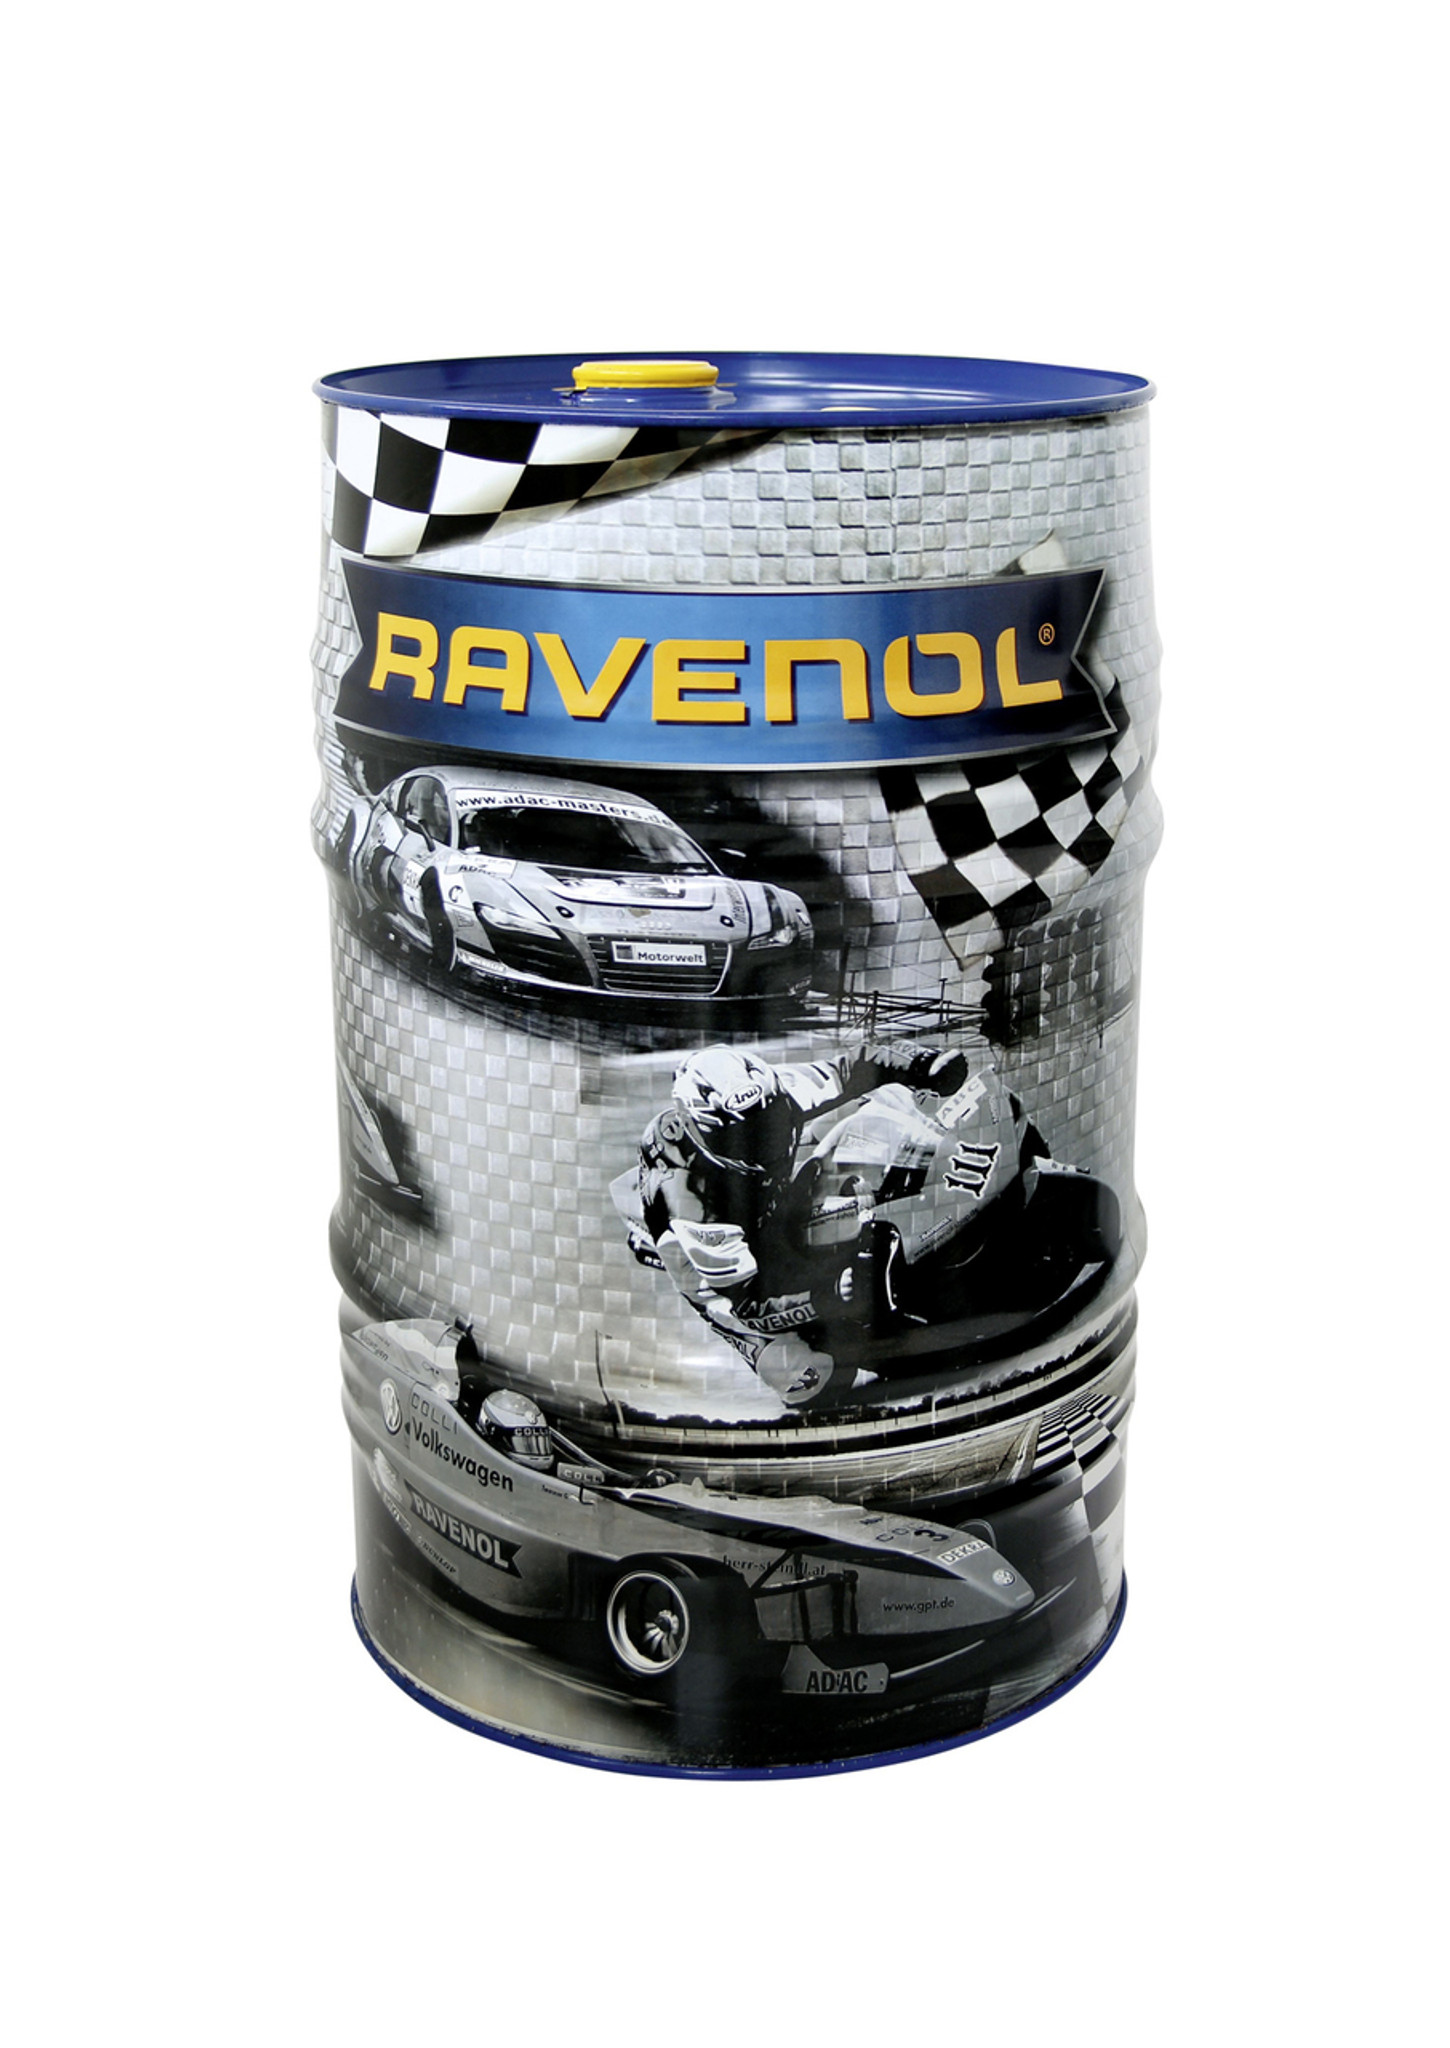 Ravenol VMO 5W40 How does the original engine oil look like? 